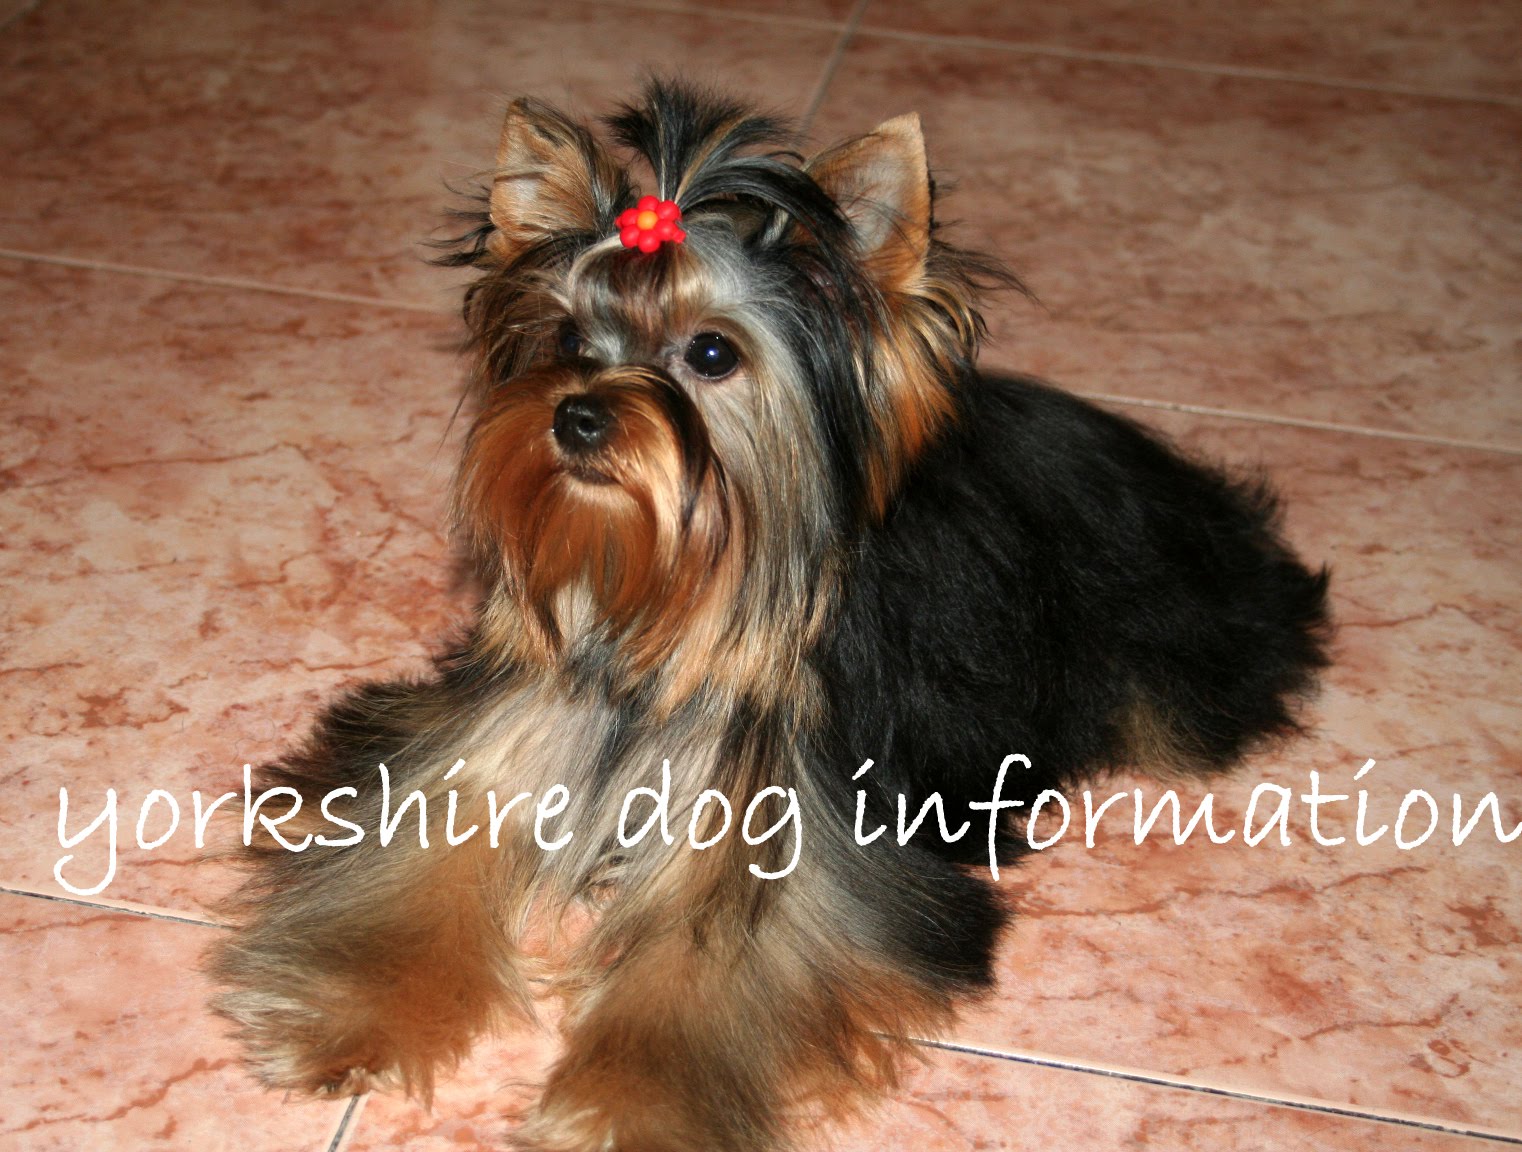 yorkshire dog information